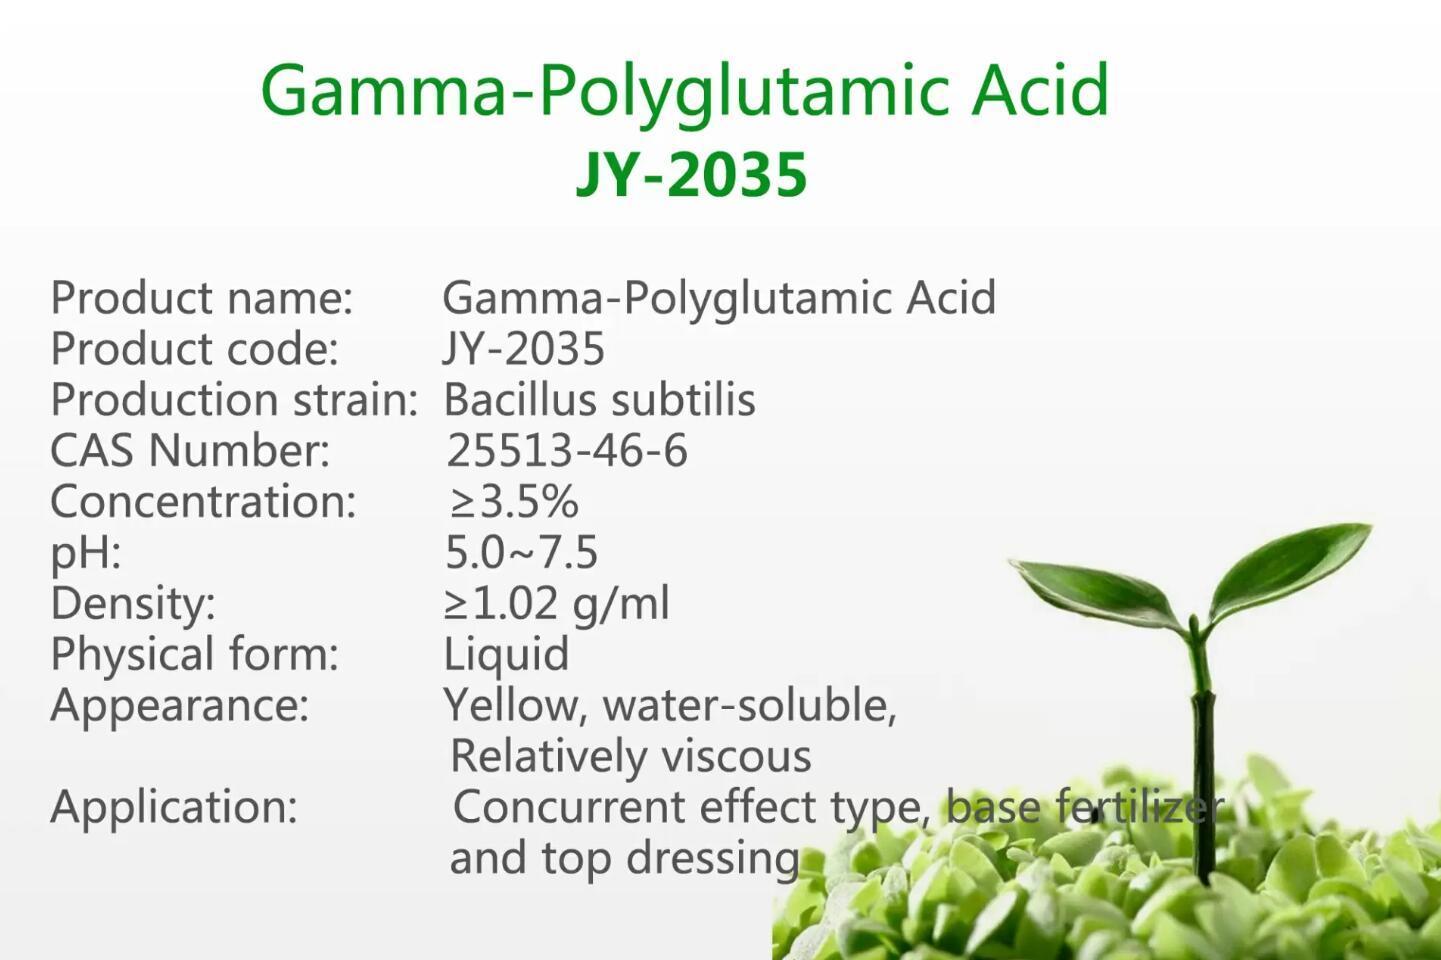 Best γ-Polyglutamic Acid JY-2035 on sales